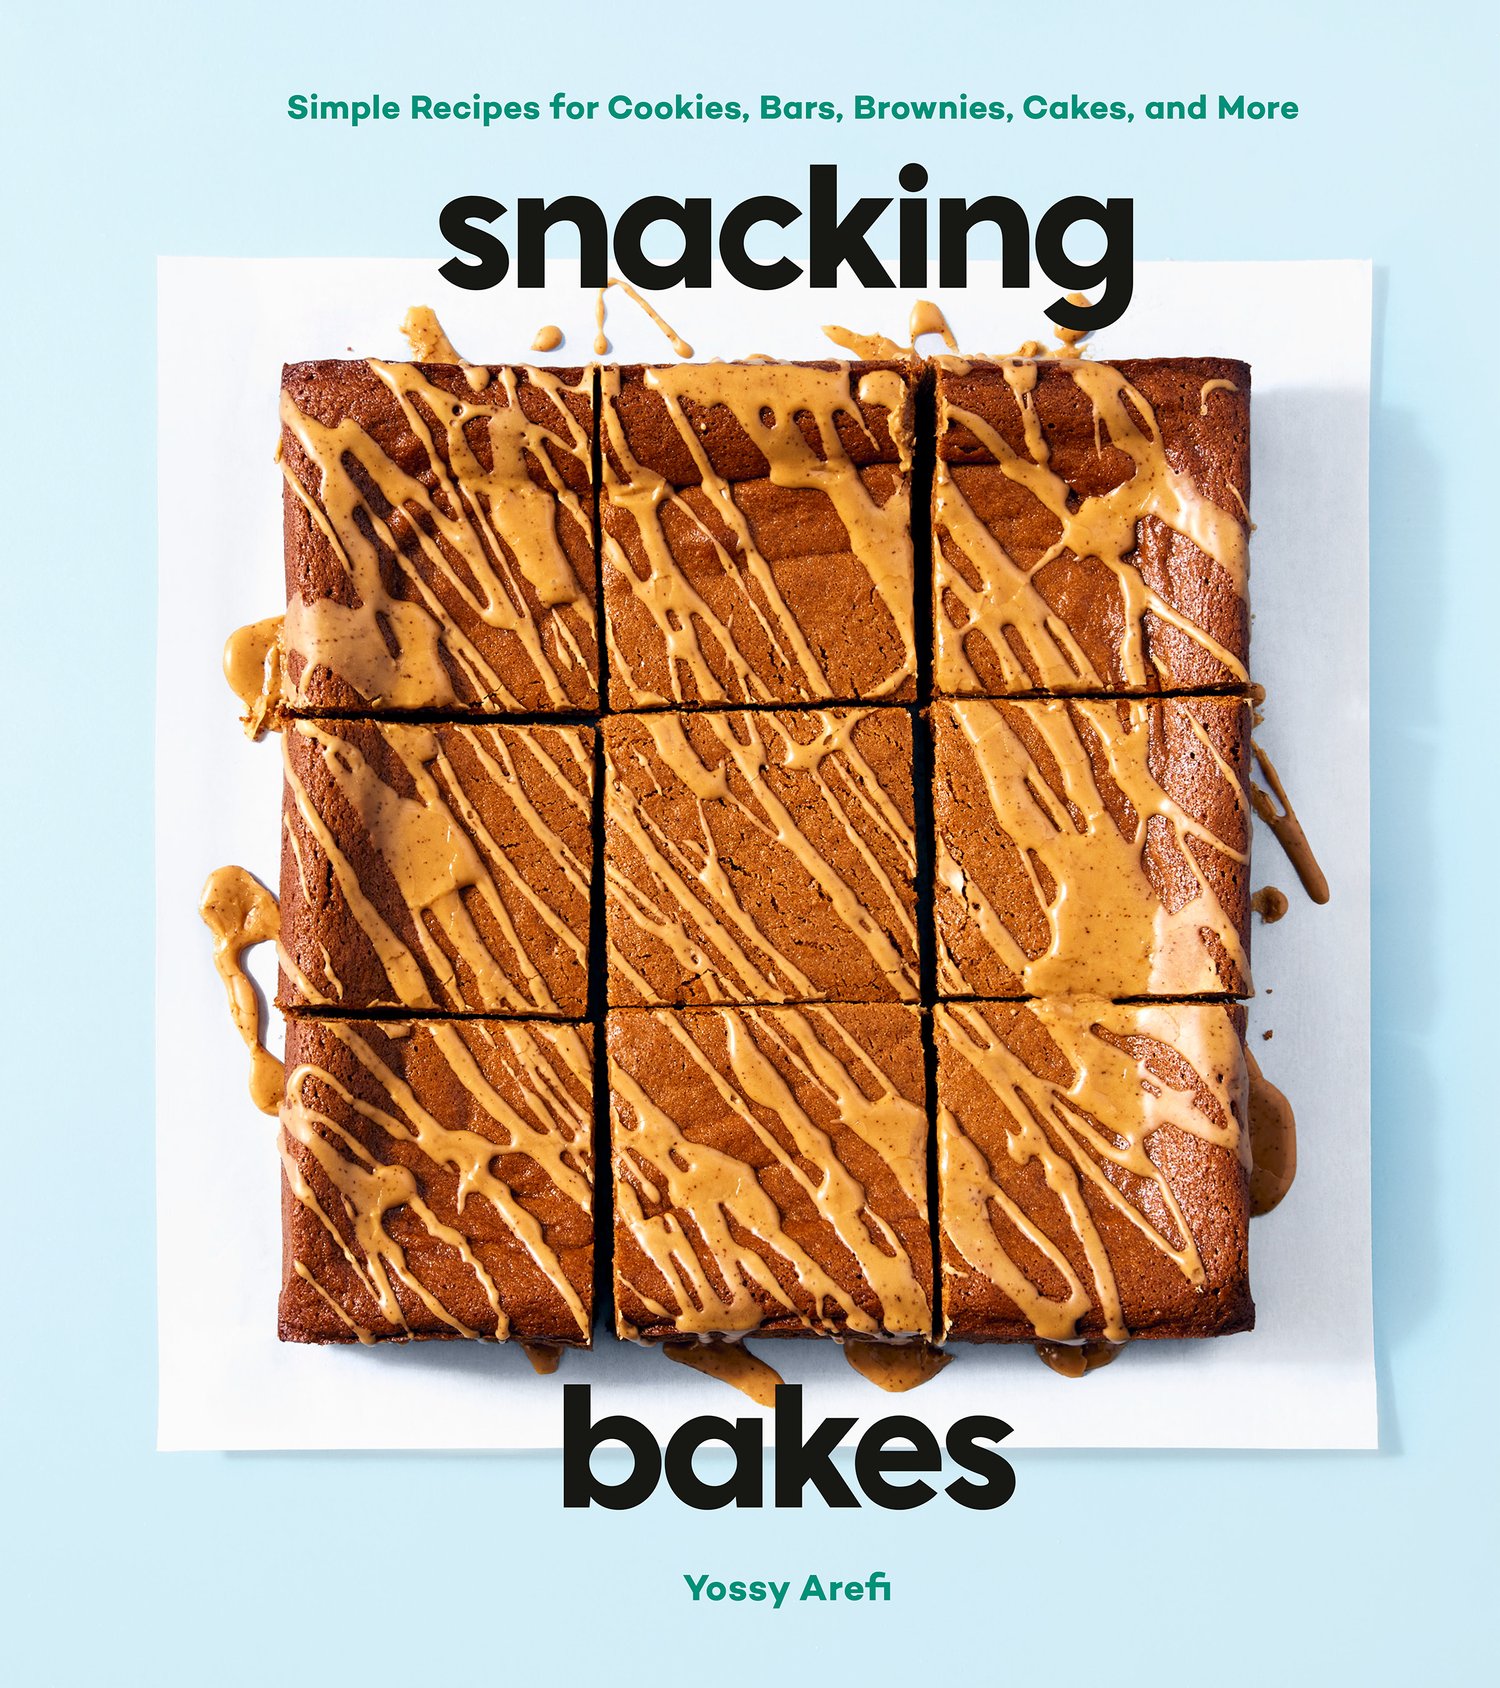 Snacking Bakes! — Apt. 2B Baking Co.